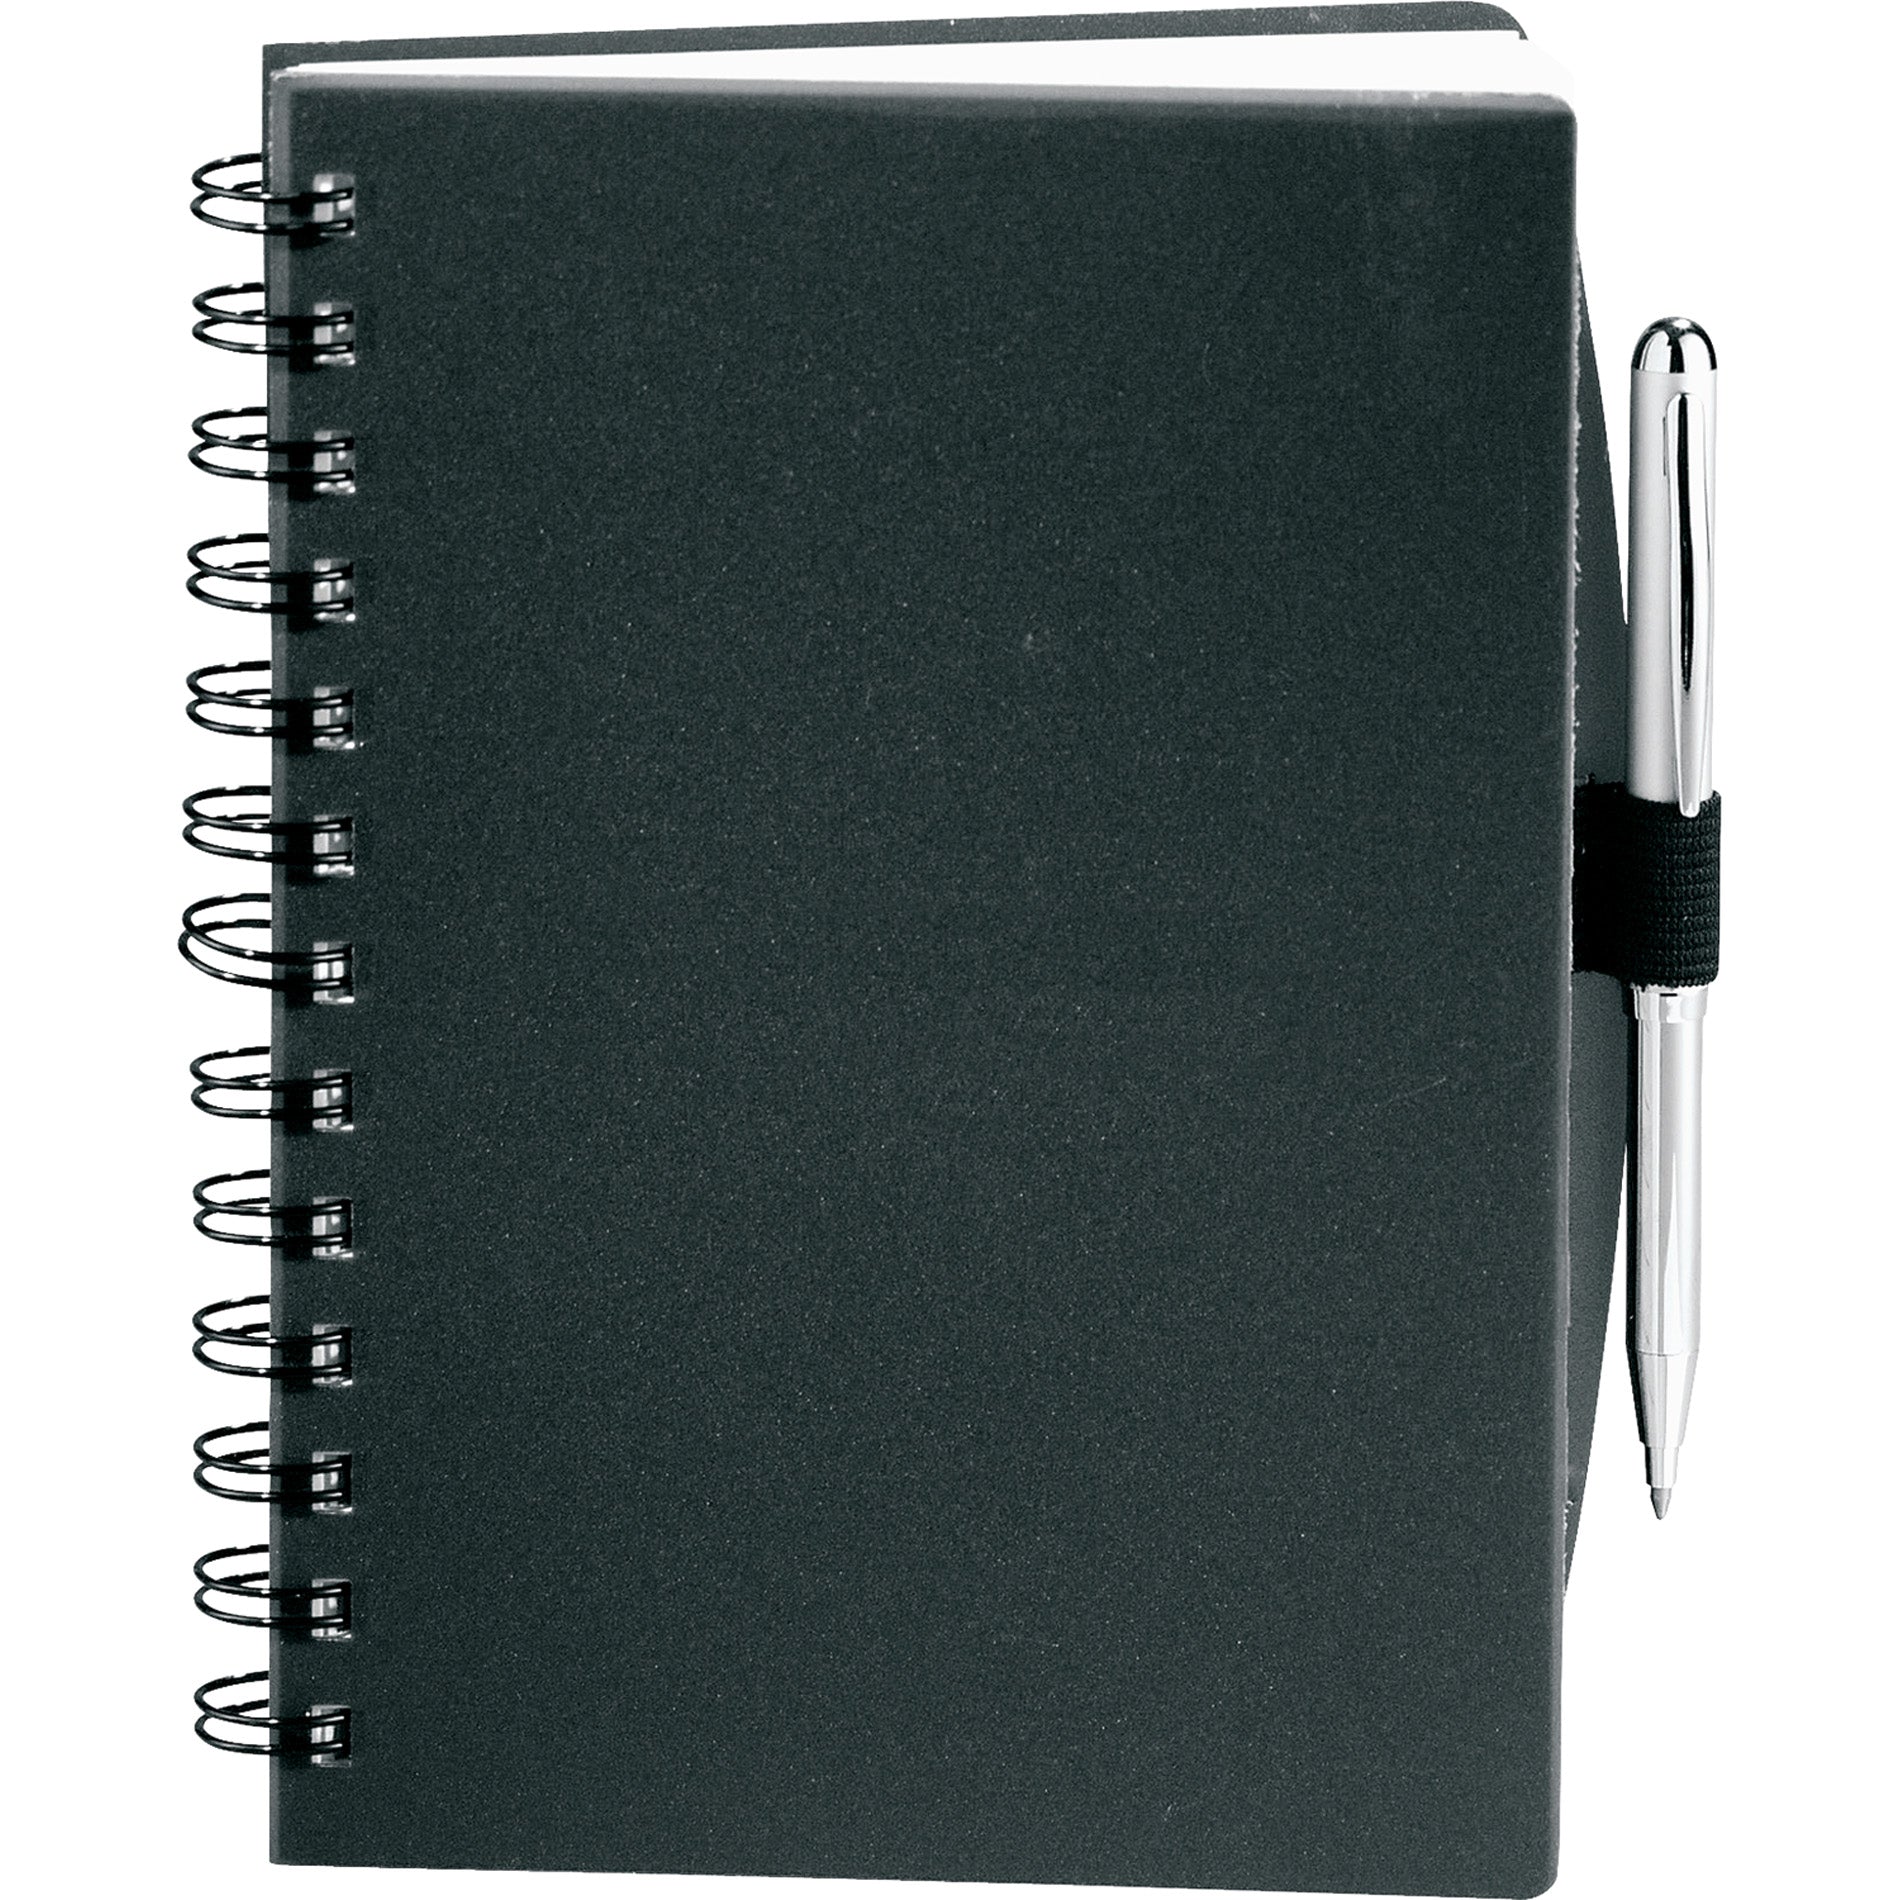 Spectra JournalBook 2800 Black -NLA